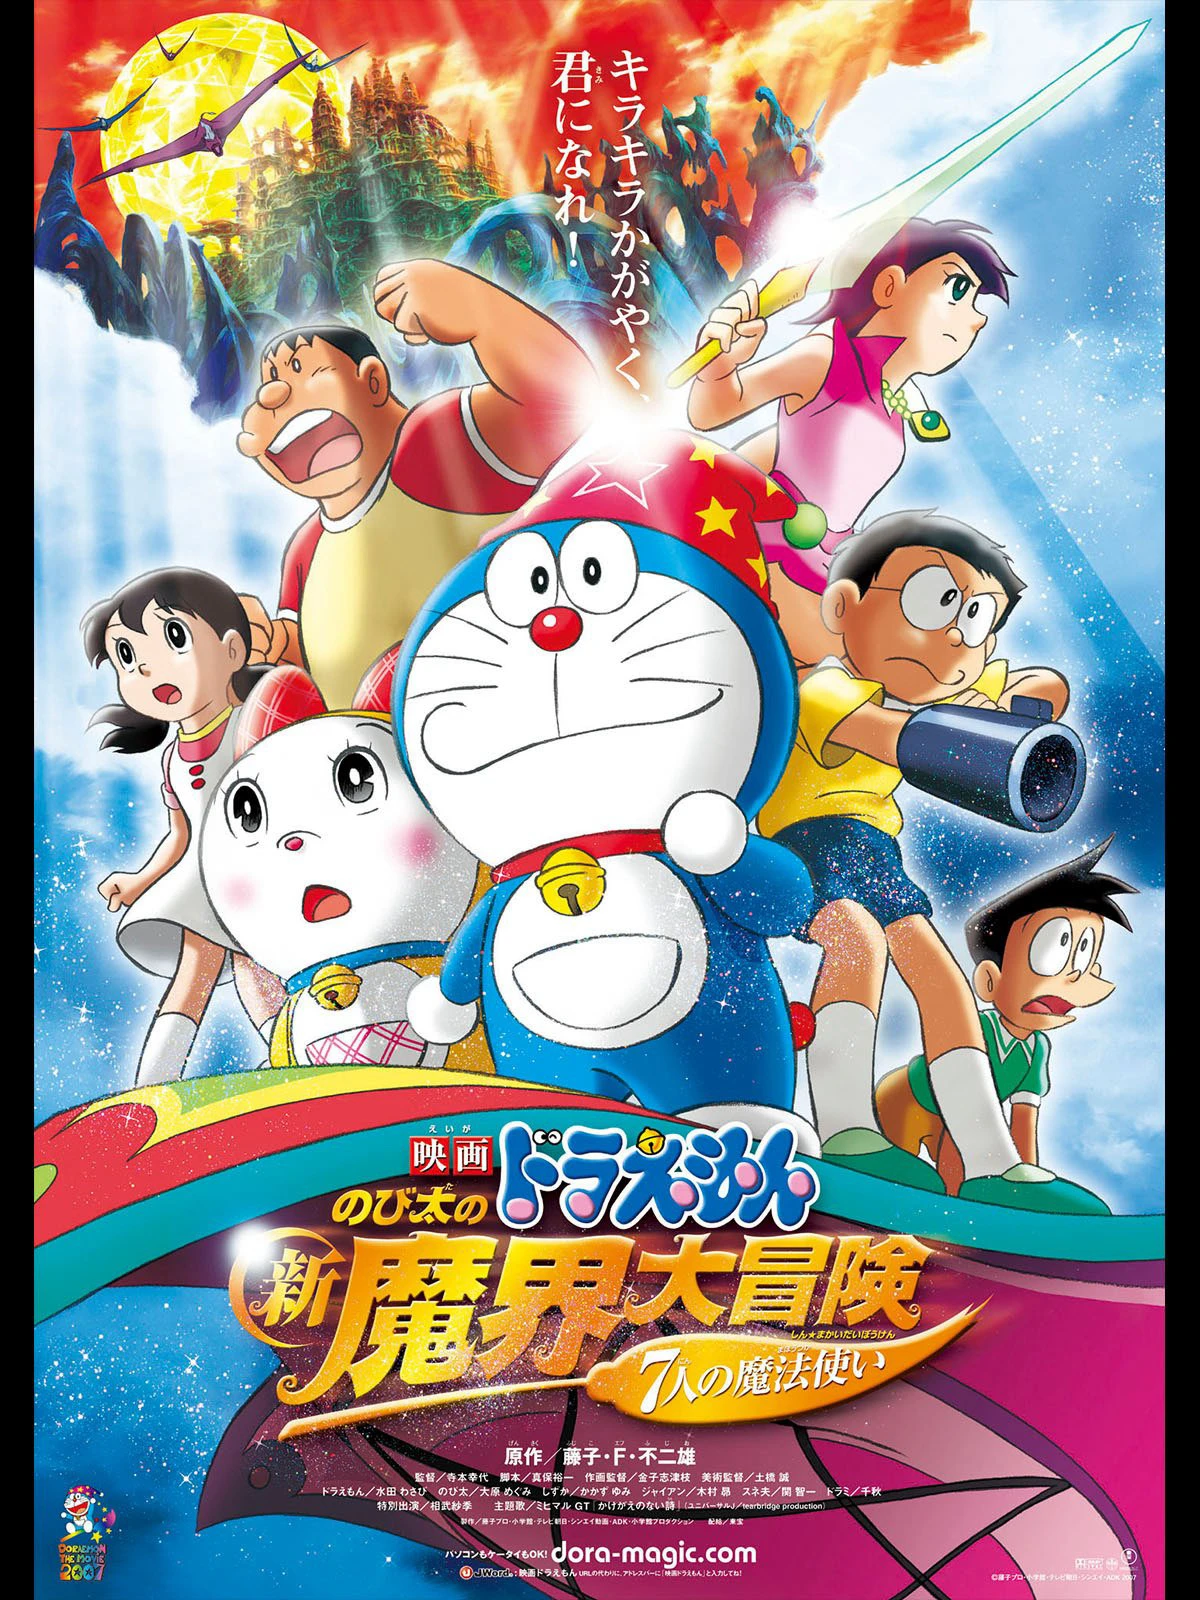 Phim Doraemon the Movie: Nobita's New Great Adventure into the Underworld - Doraemon the Movie: Nobita's New Great Adventure into the Underworld (2007)